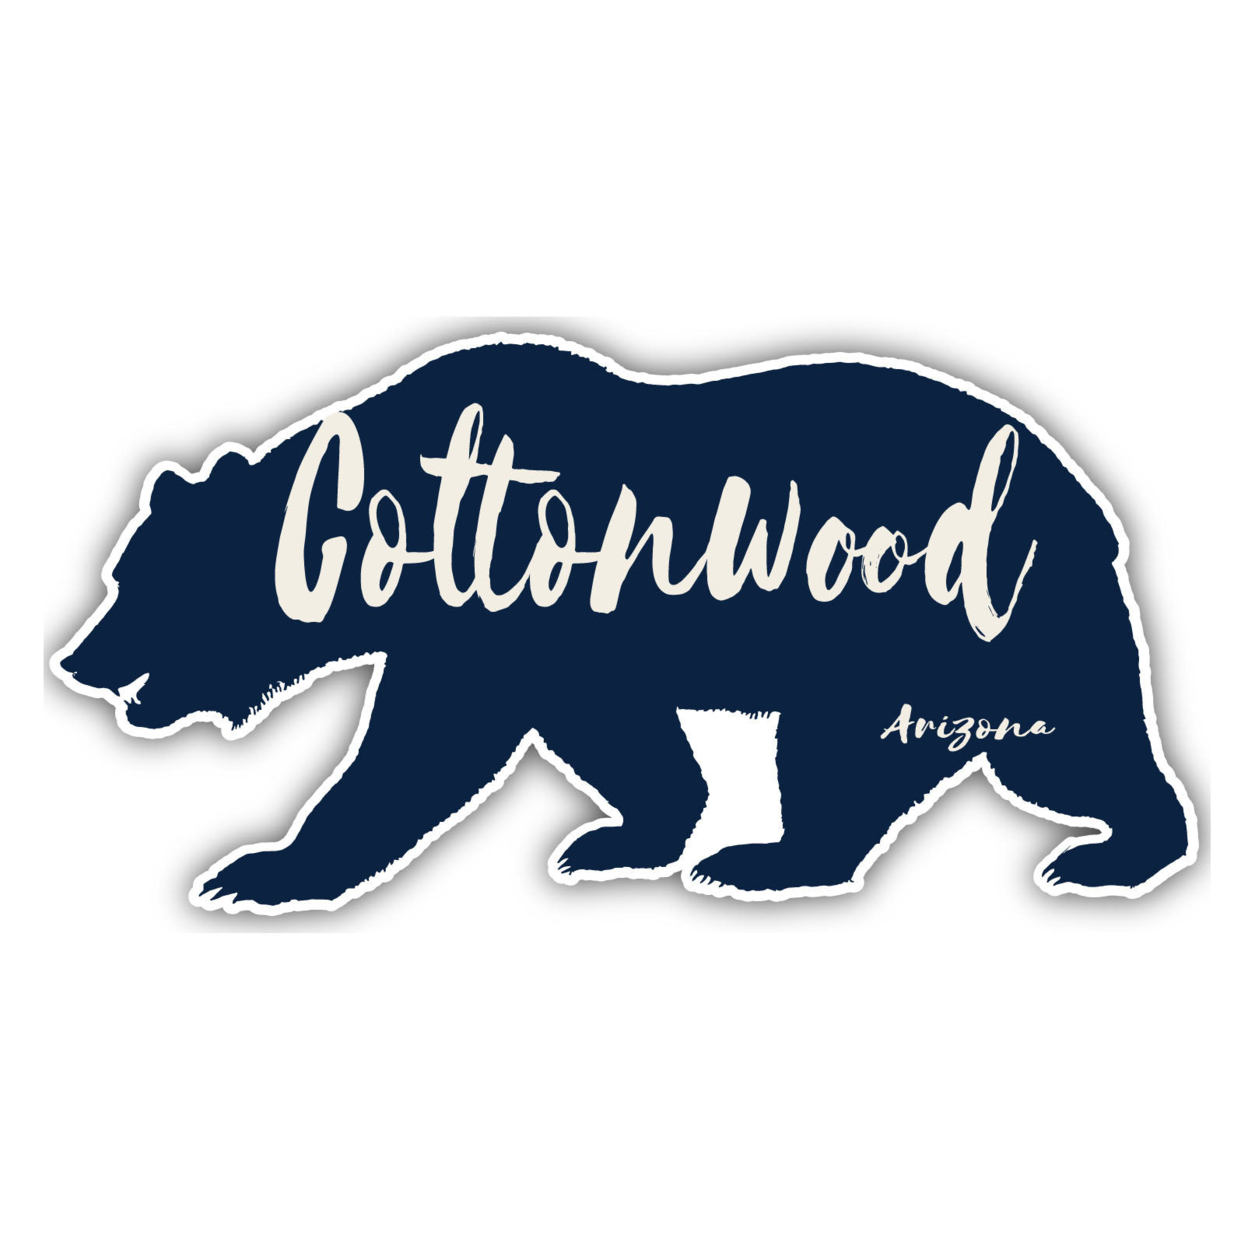 Cottonwood Arizona Souvenir Decorative Stickers (Choose Theme And Size) - 4-Pack, 8-Inch, Bear